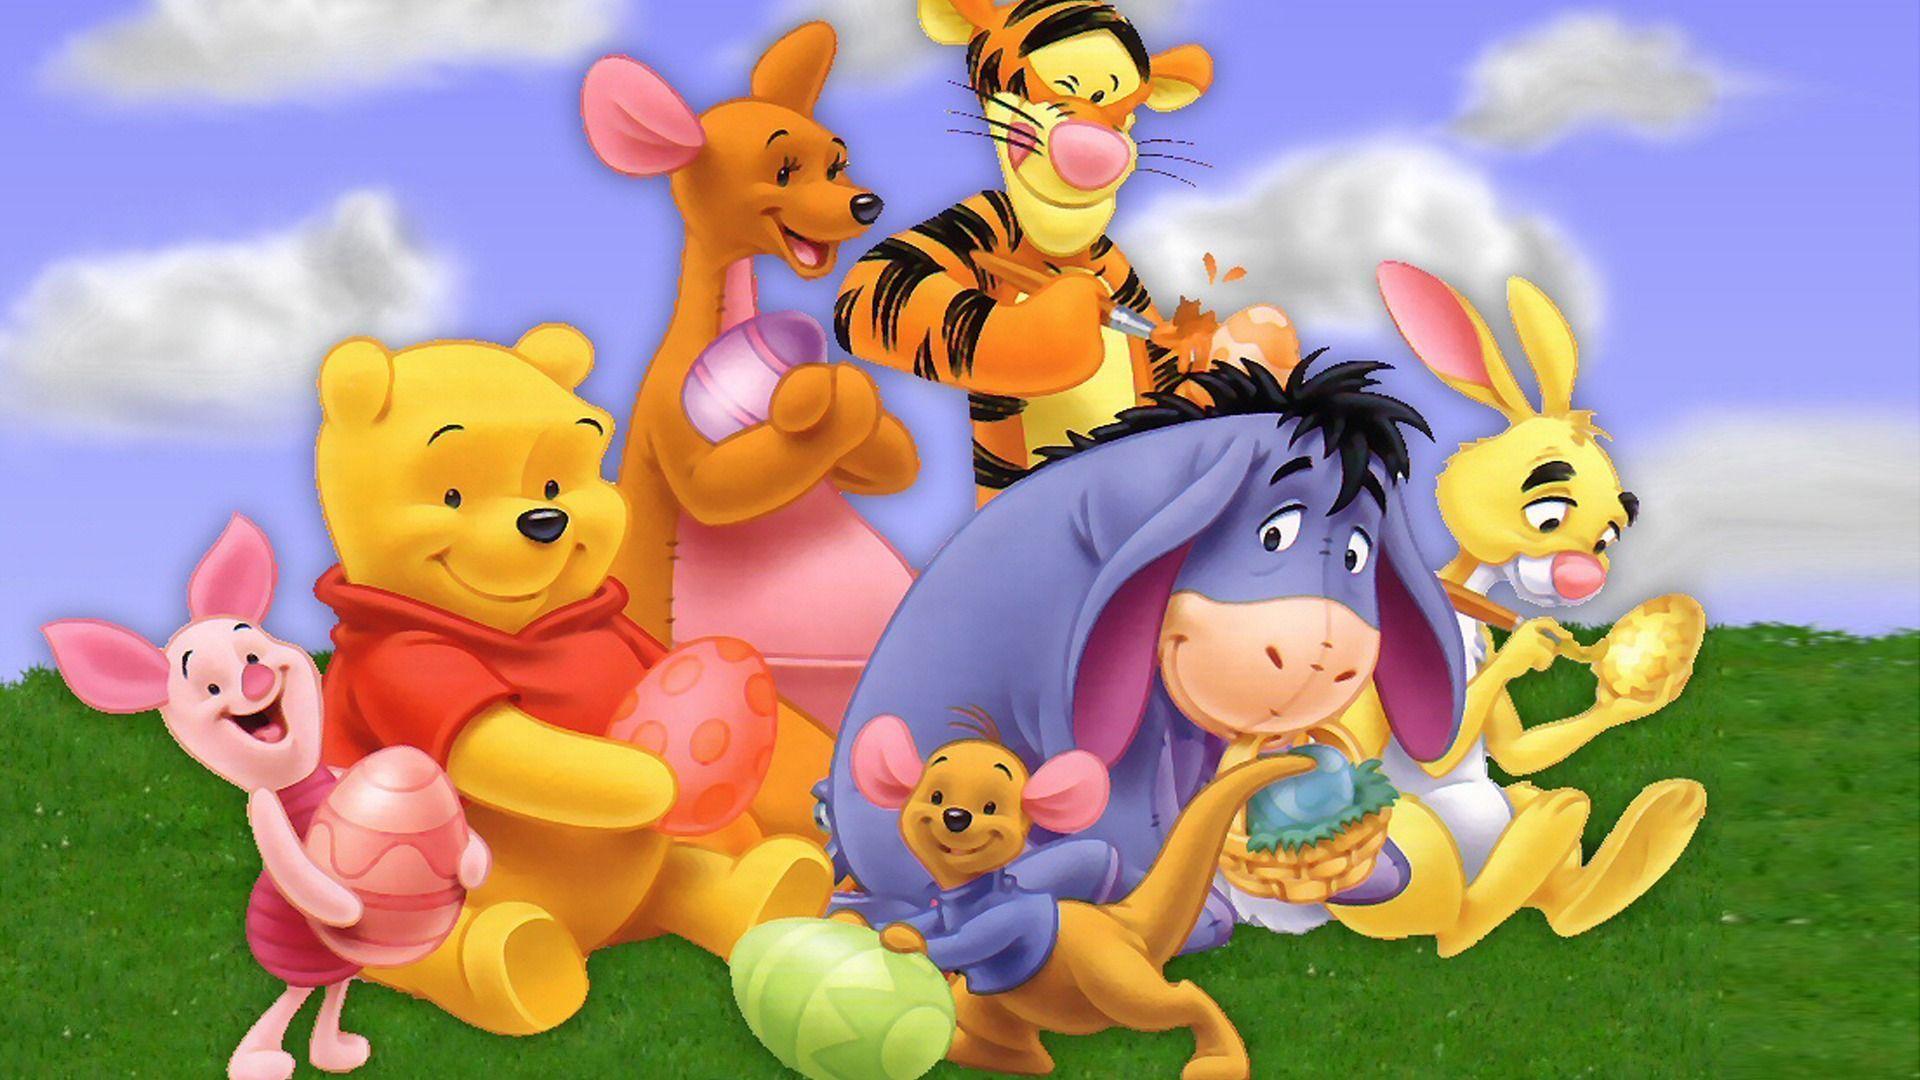 Winnie the pooh cartoon character HD desktop wallpaper second series